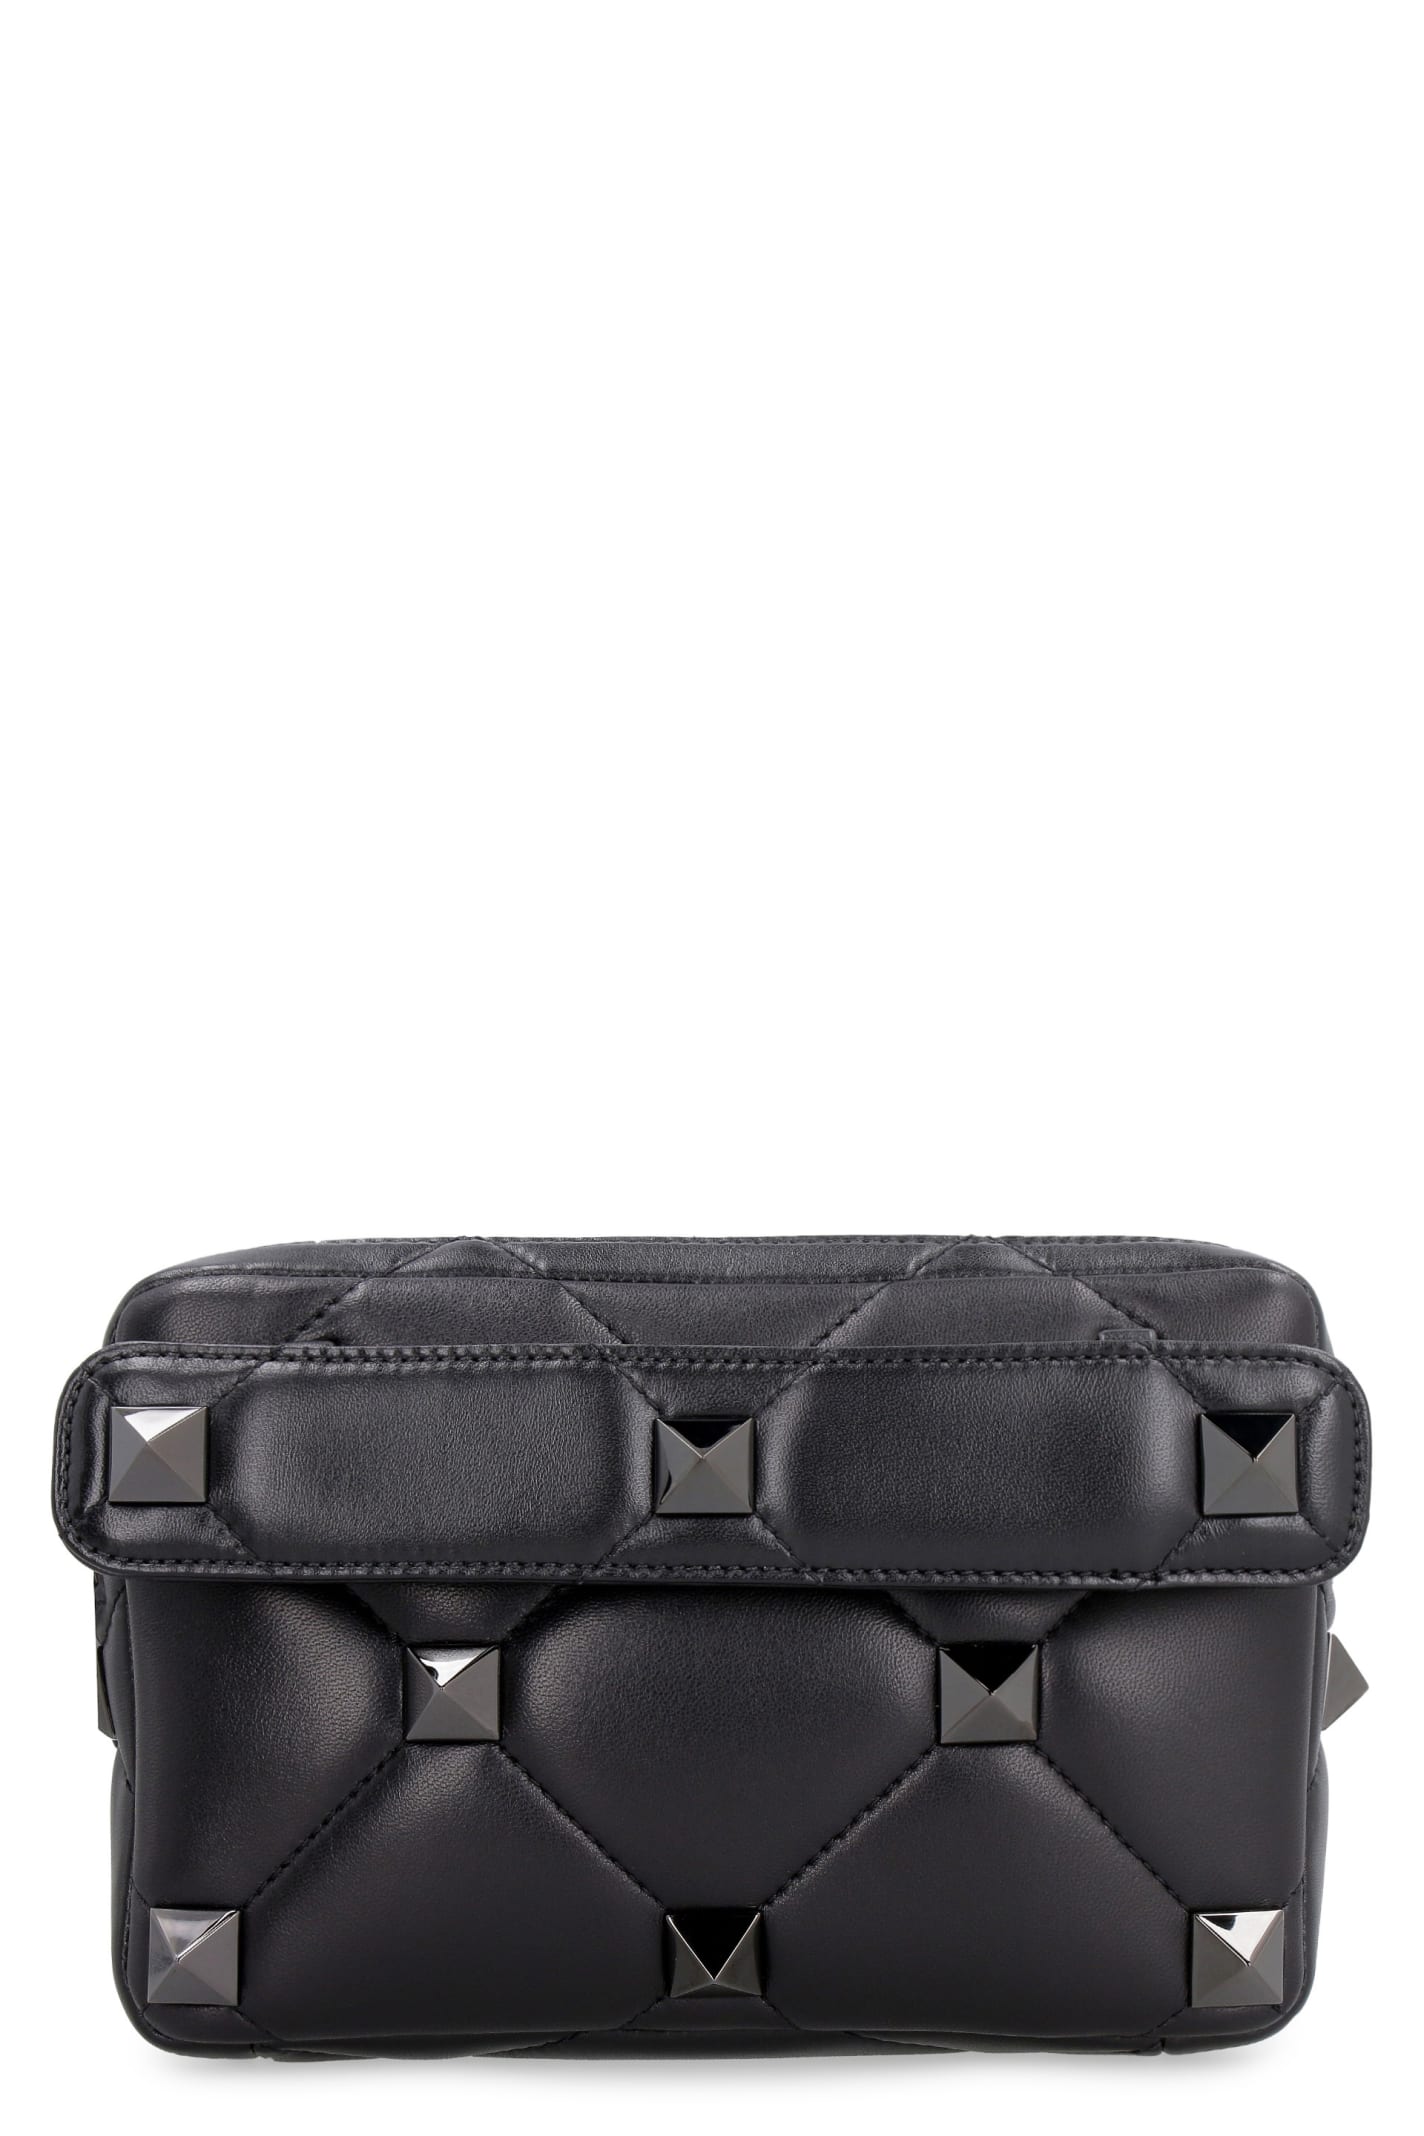 Valentino Garavani - Roman Stud Quilted Leather Shoulder Bag